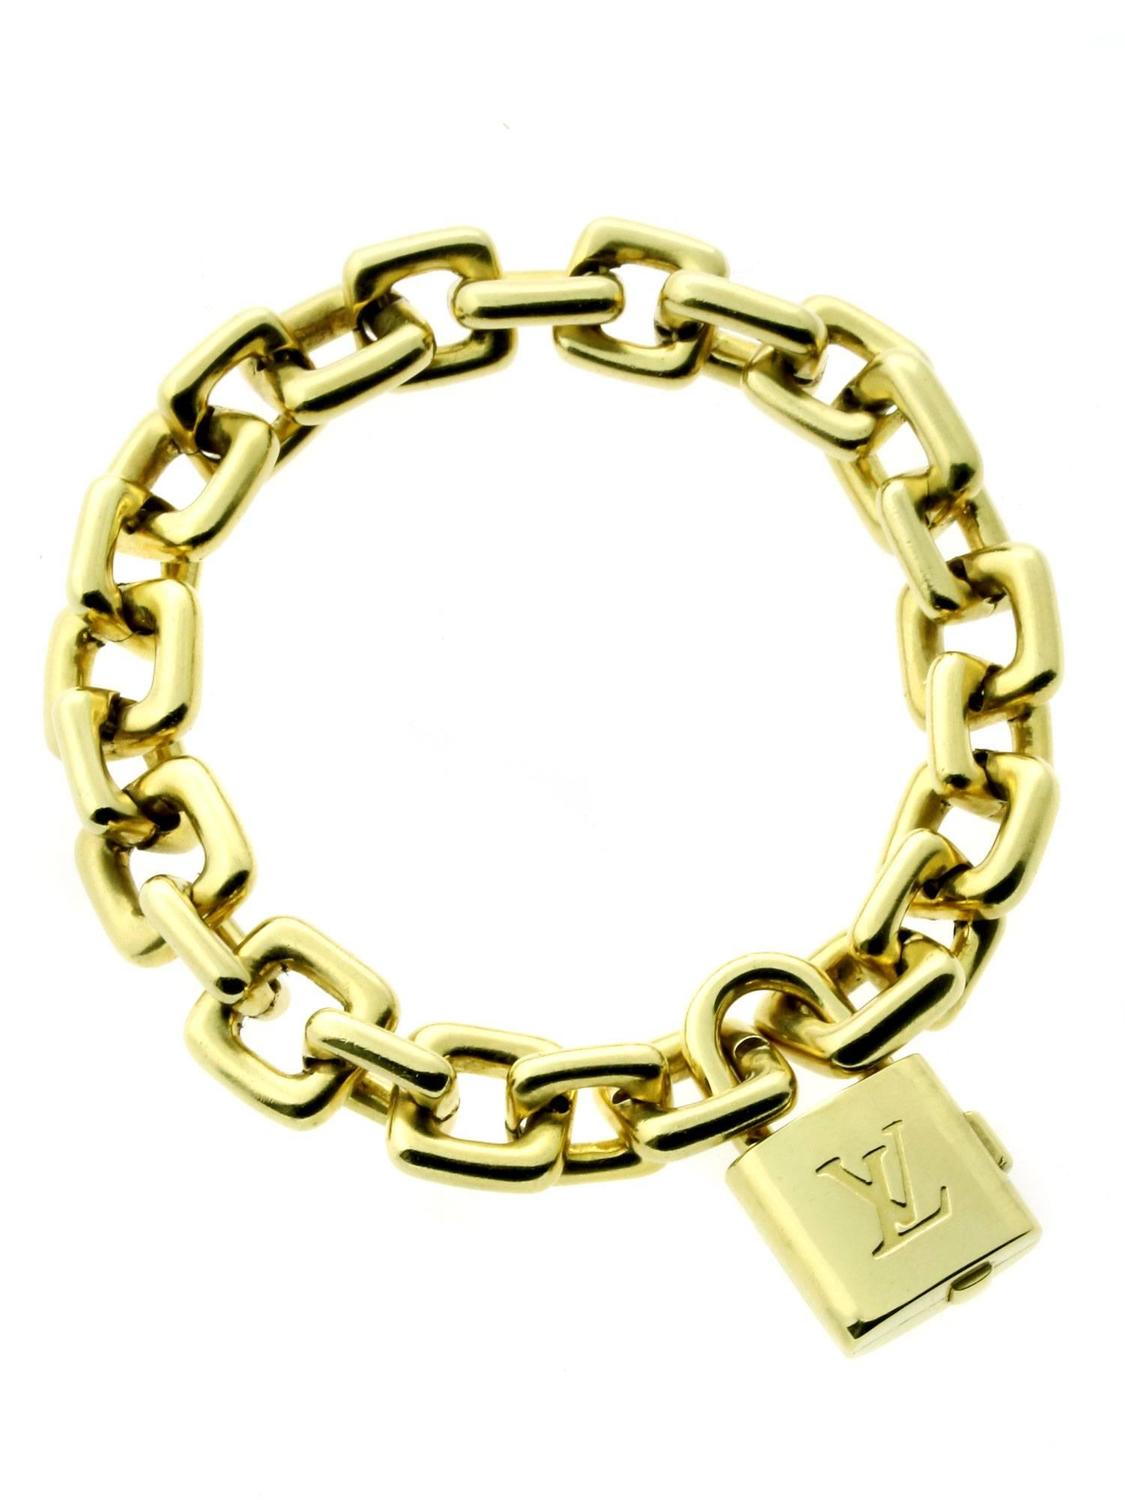 Louis Vuitton Padlock Charm Gold Bracelet For Sale at 1stdibs